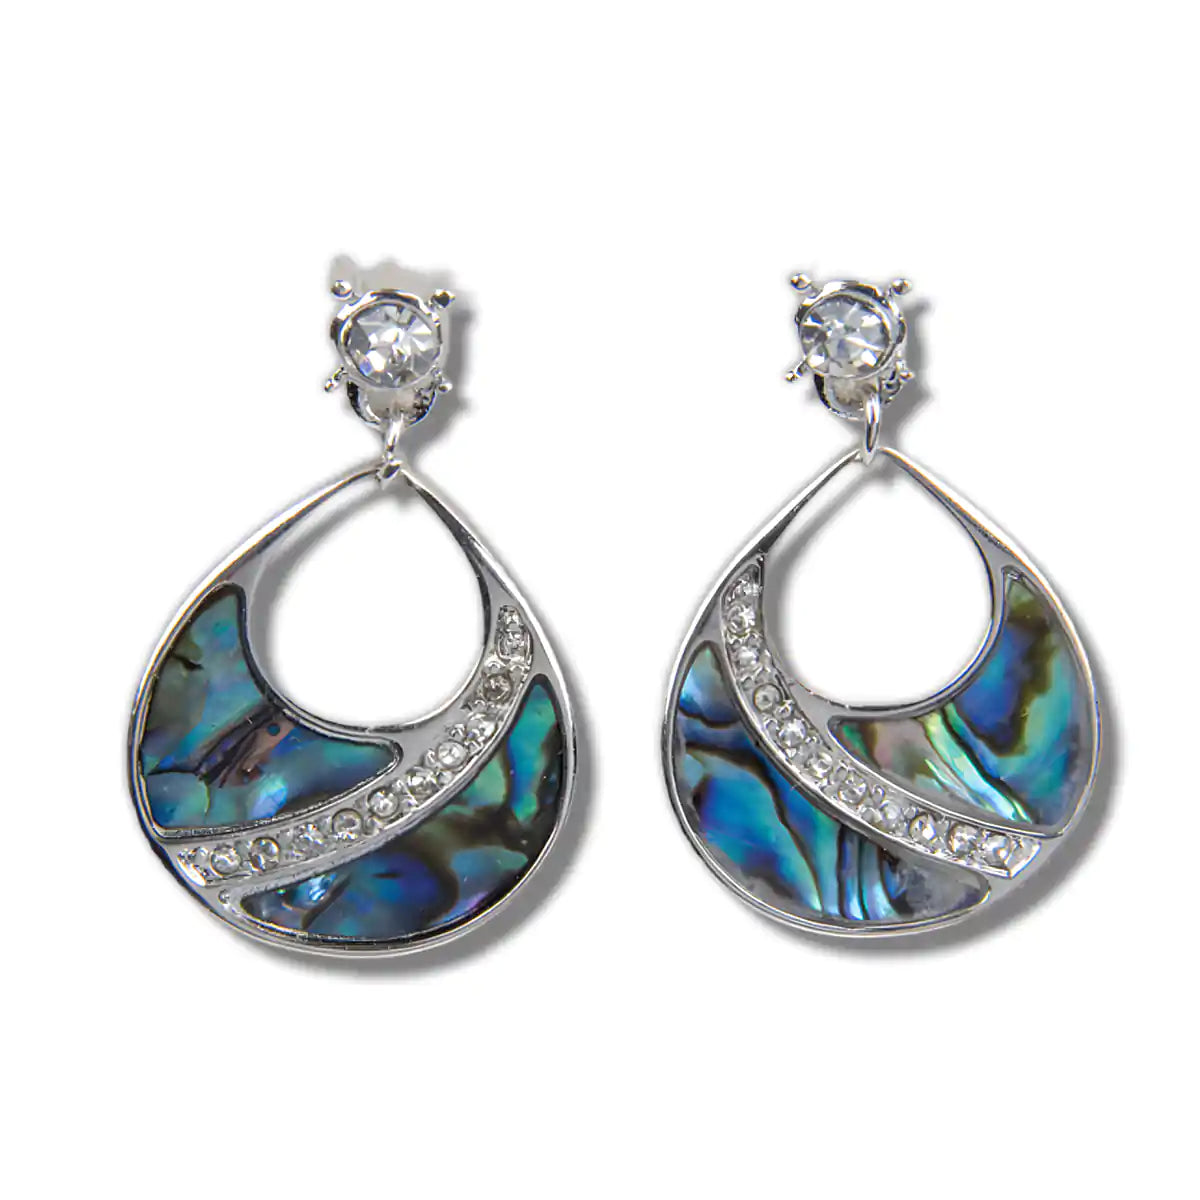 Glacier pearle enchanted evening earrings